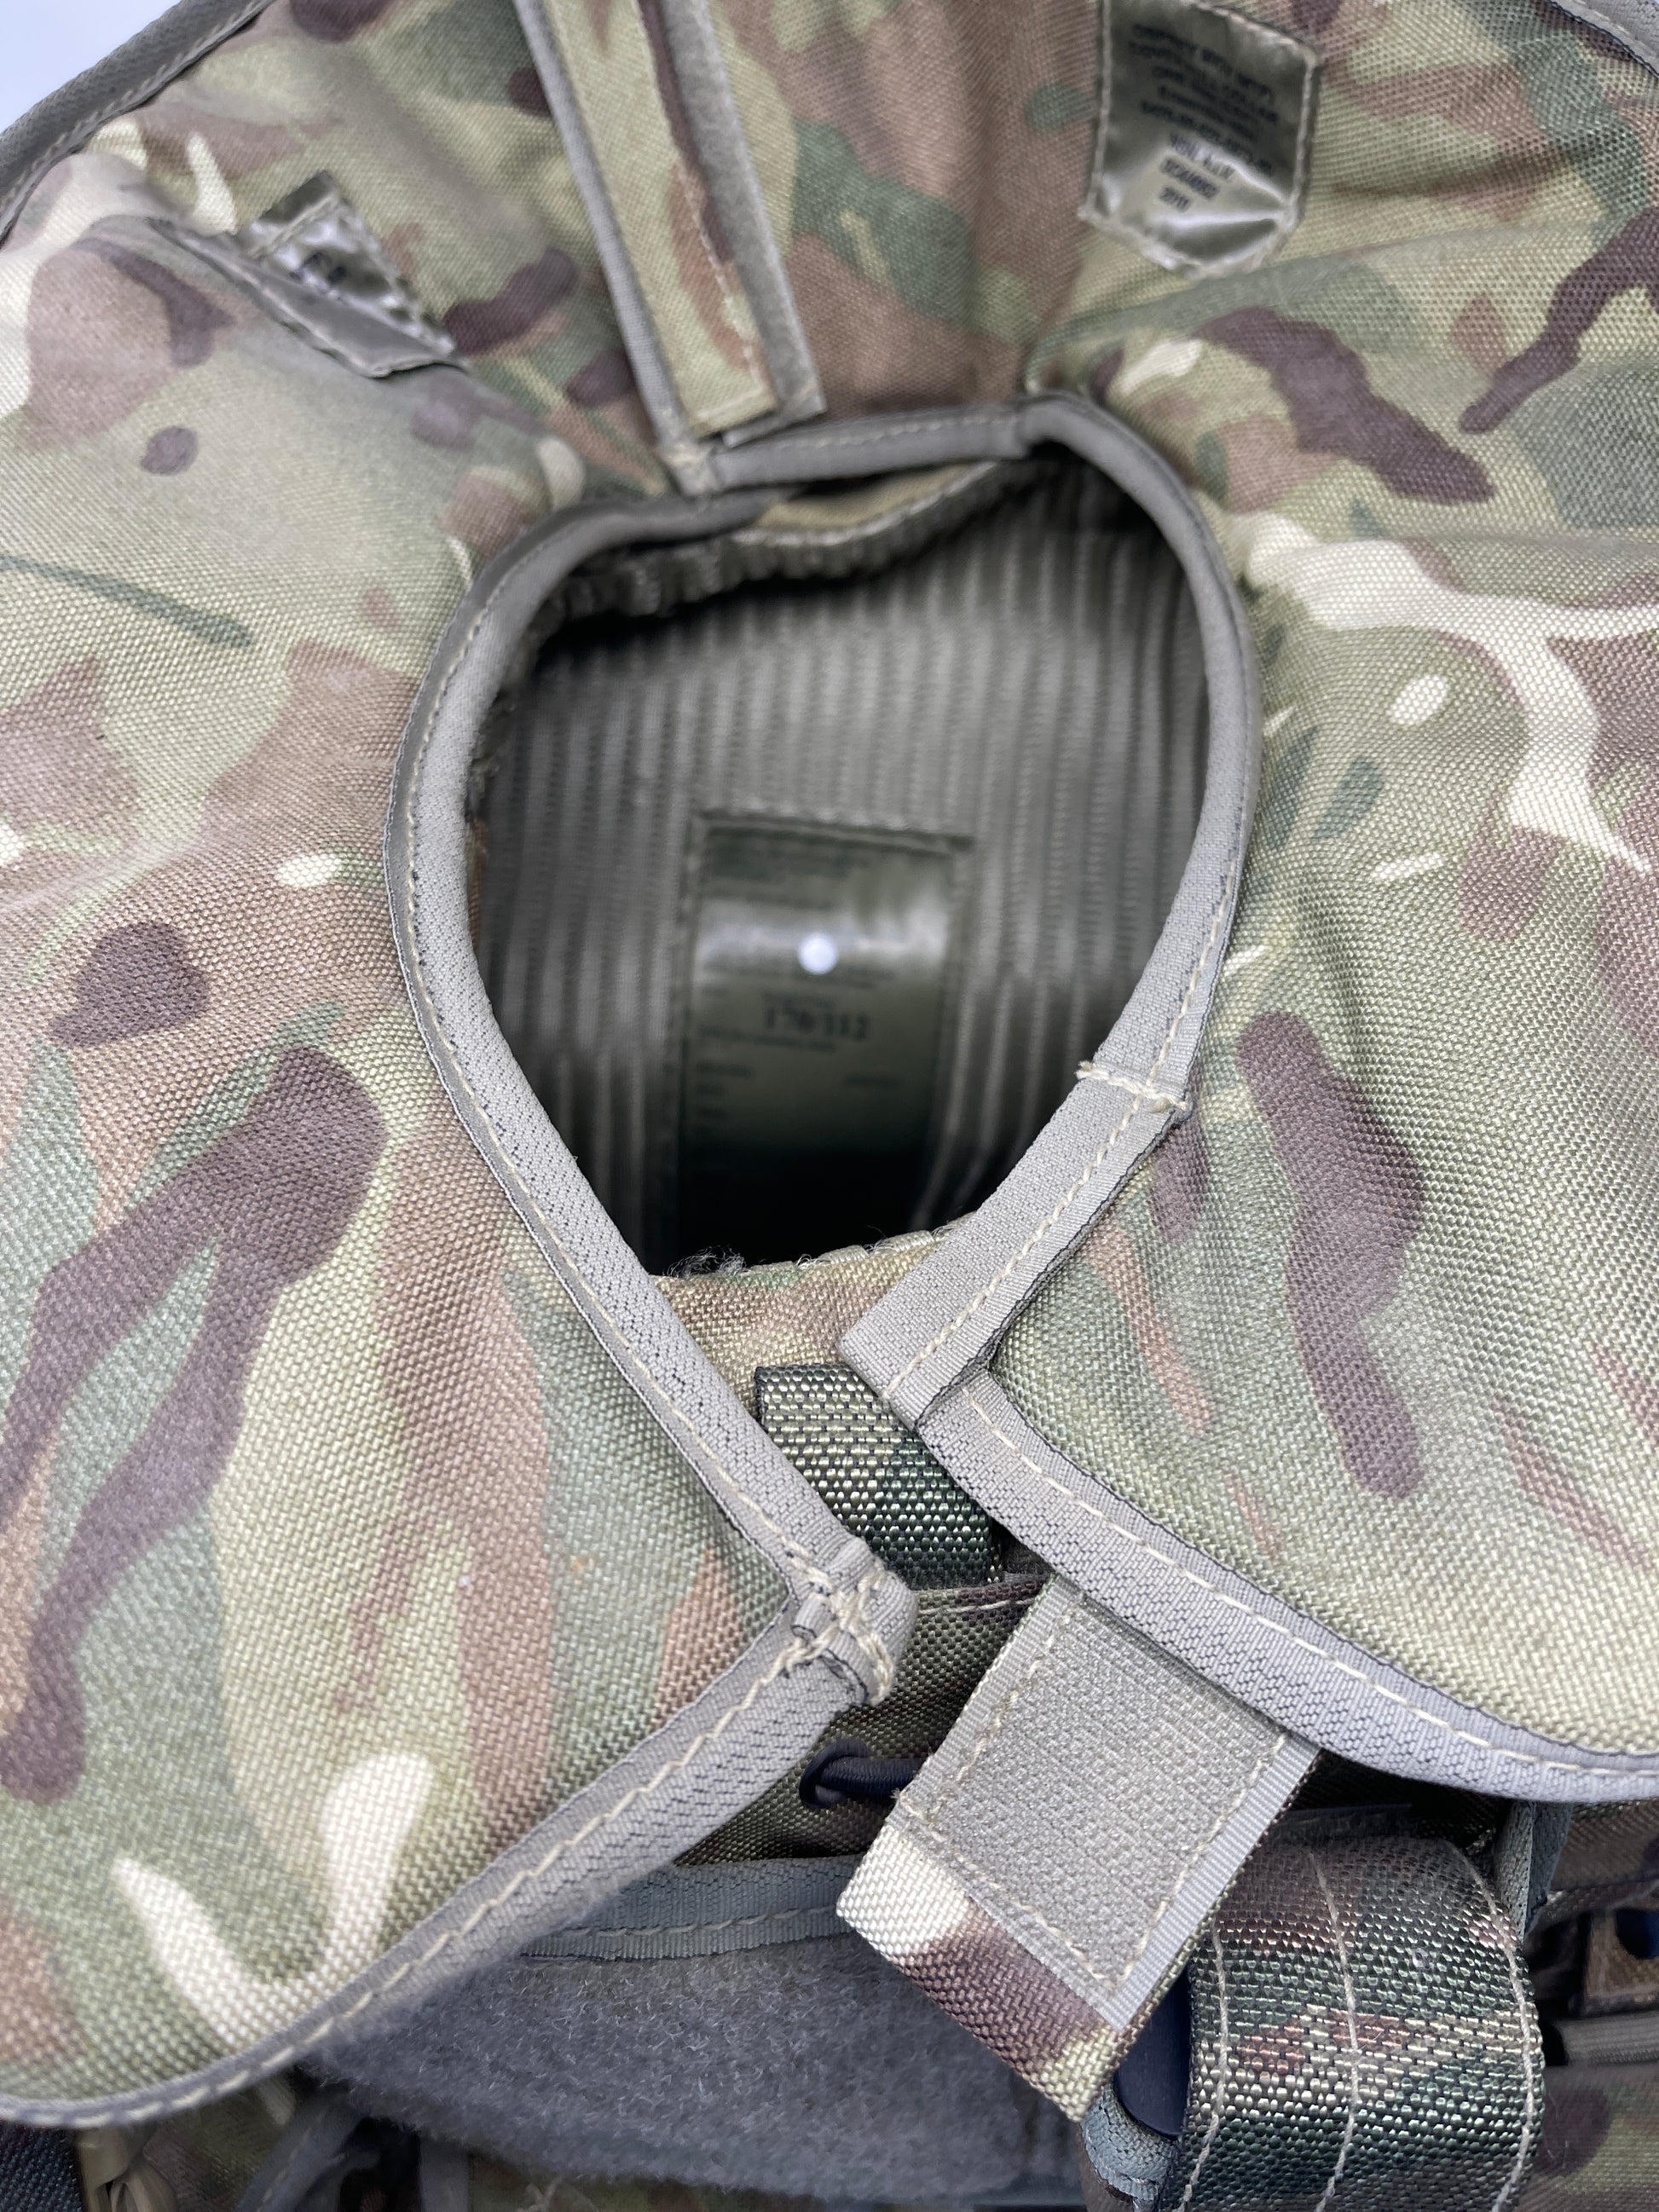 British MK1V Complete Osprey Vest complete with ALL Soft Armour